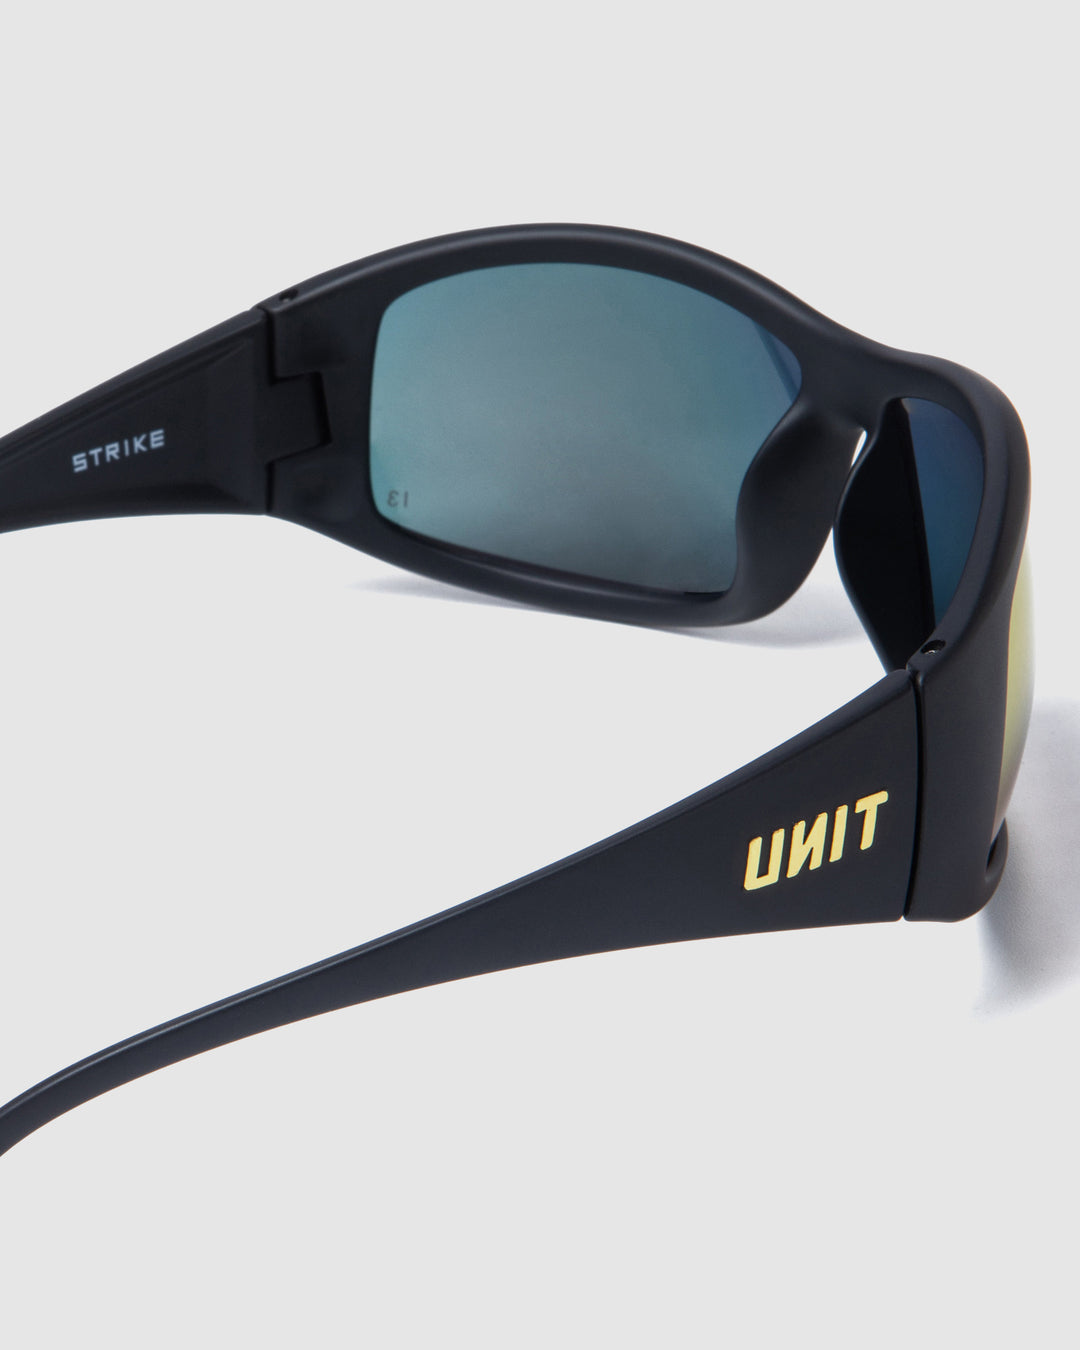 UNIT Strike - Medium Impact Safety Sunglasses - Black Orange